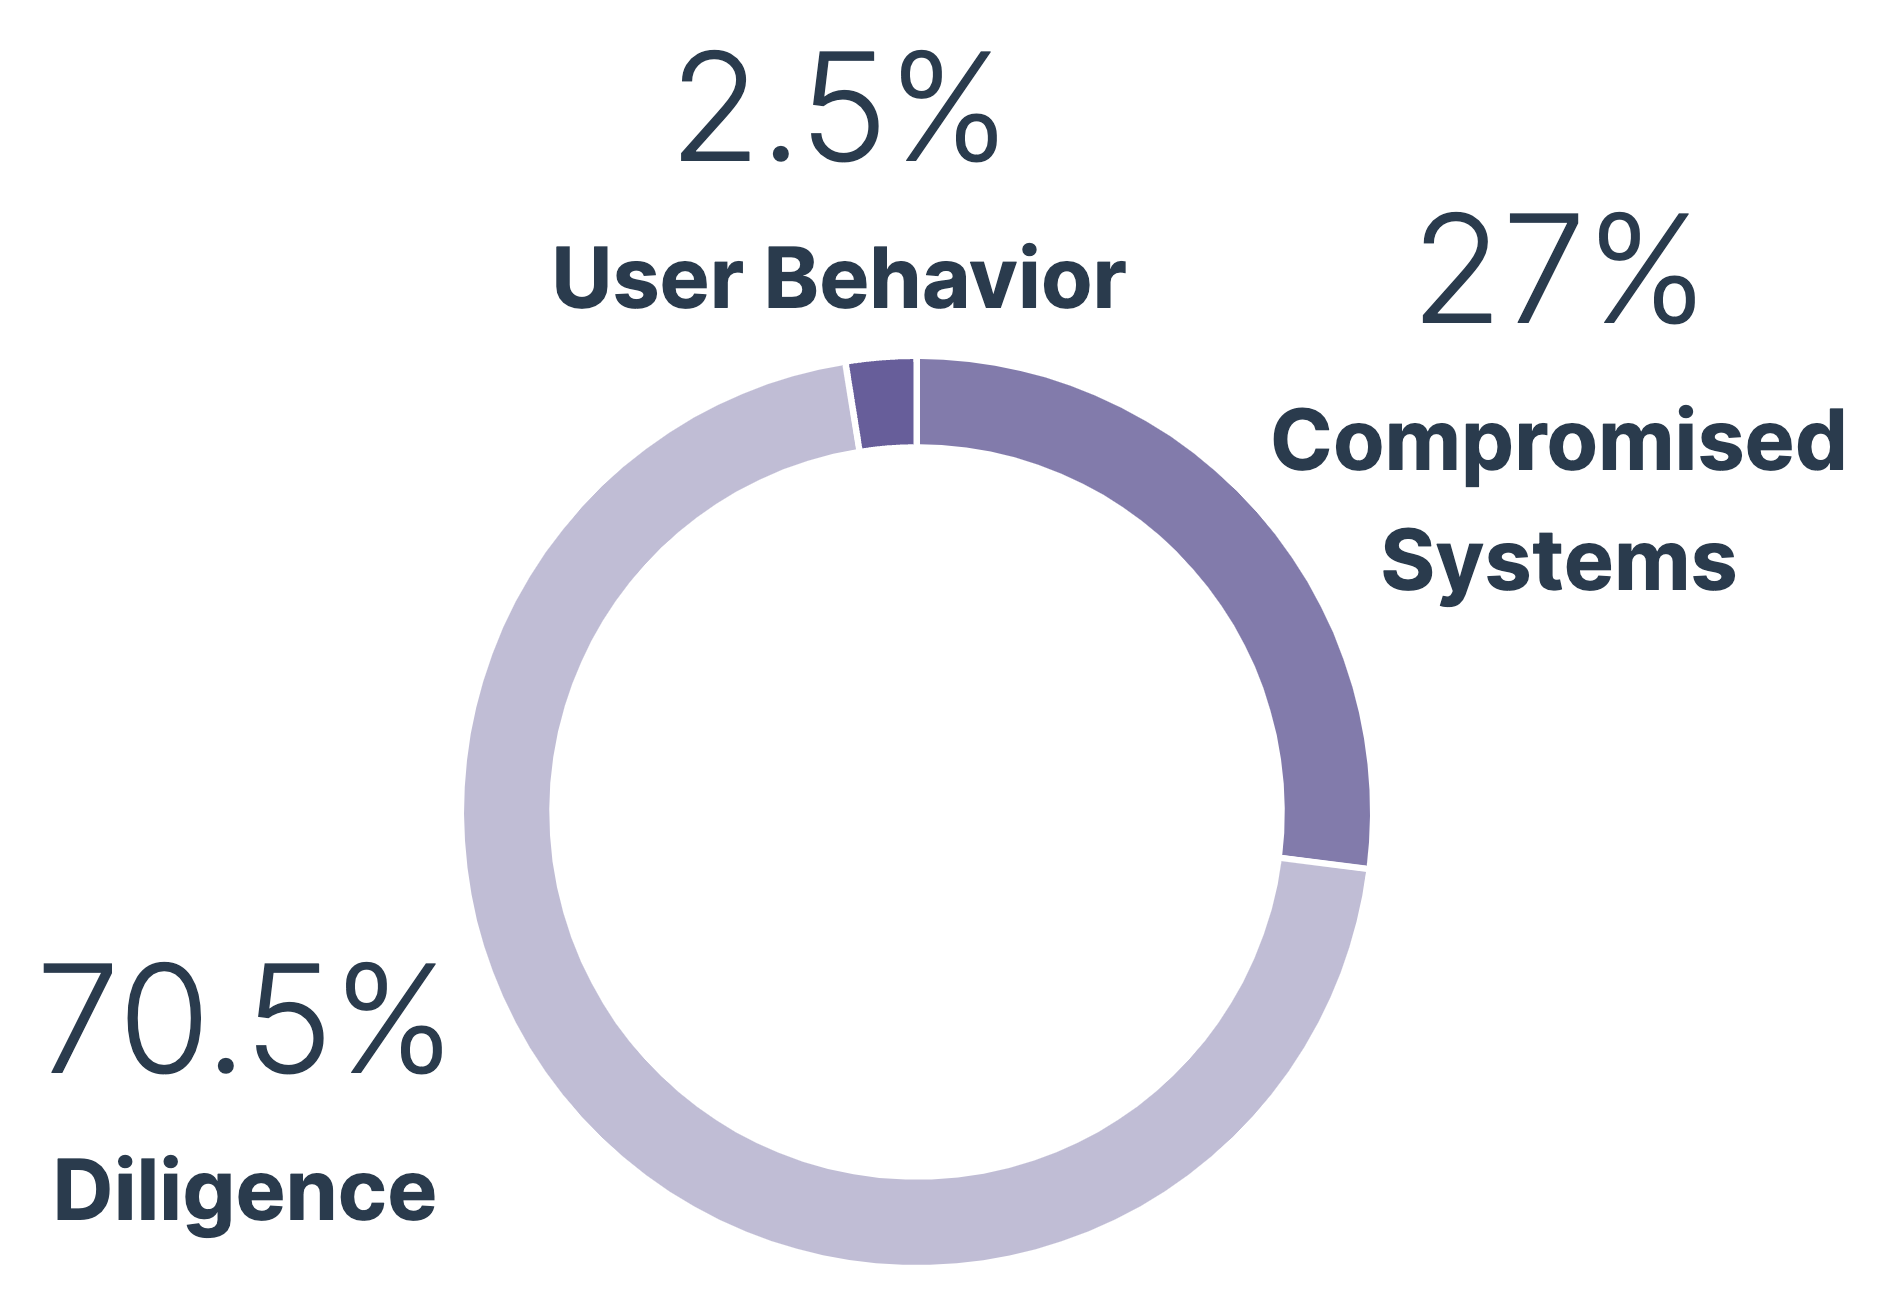 70.5% Diligence, 27% Compromised Systems, 2.5% User Behavior